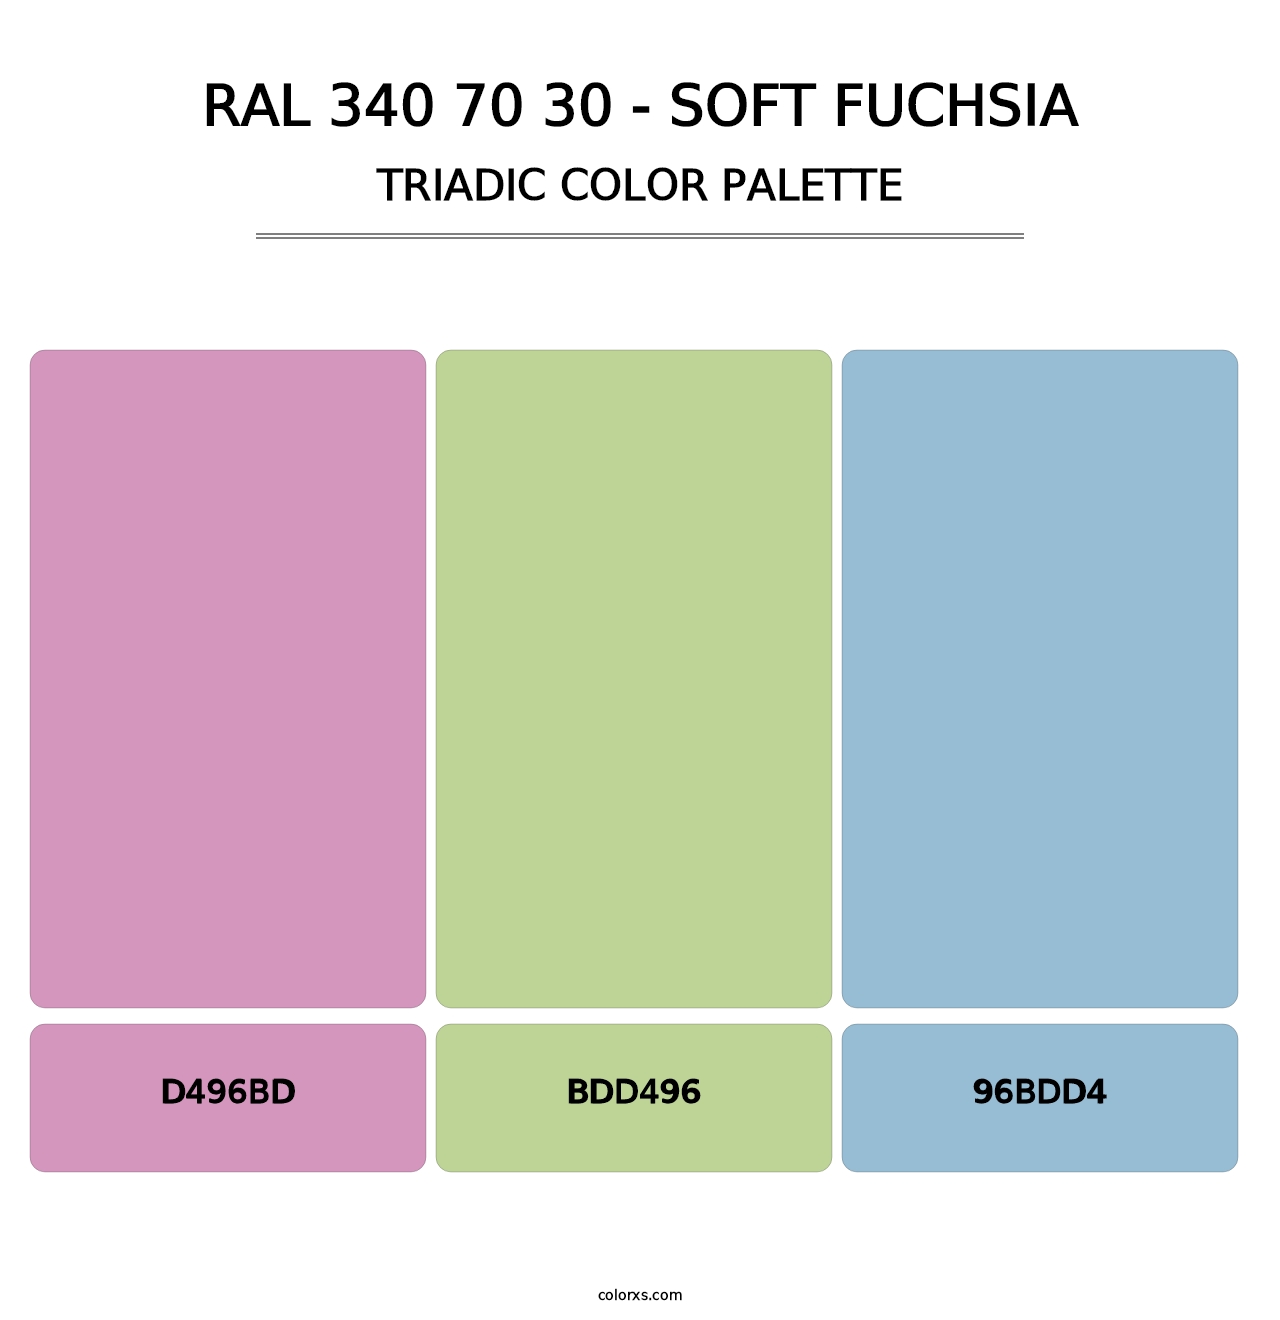 RAL 340 70 30 - Soft Fuchsia - Triadic Color Palette